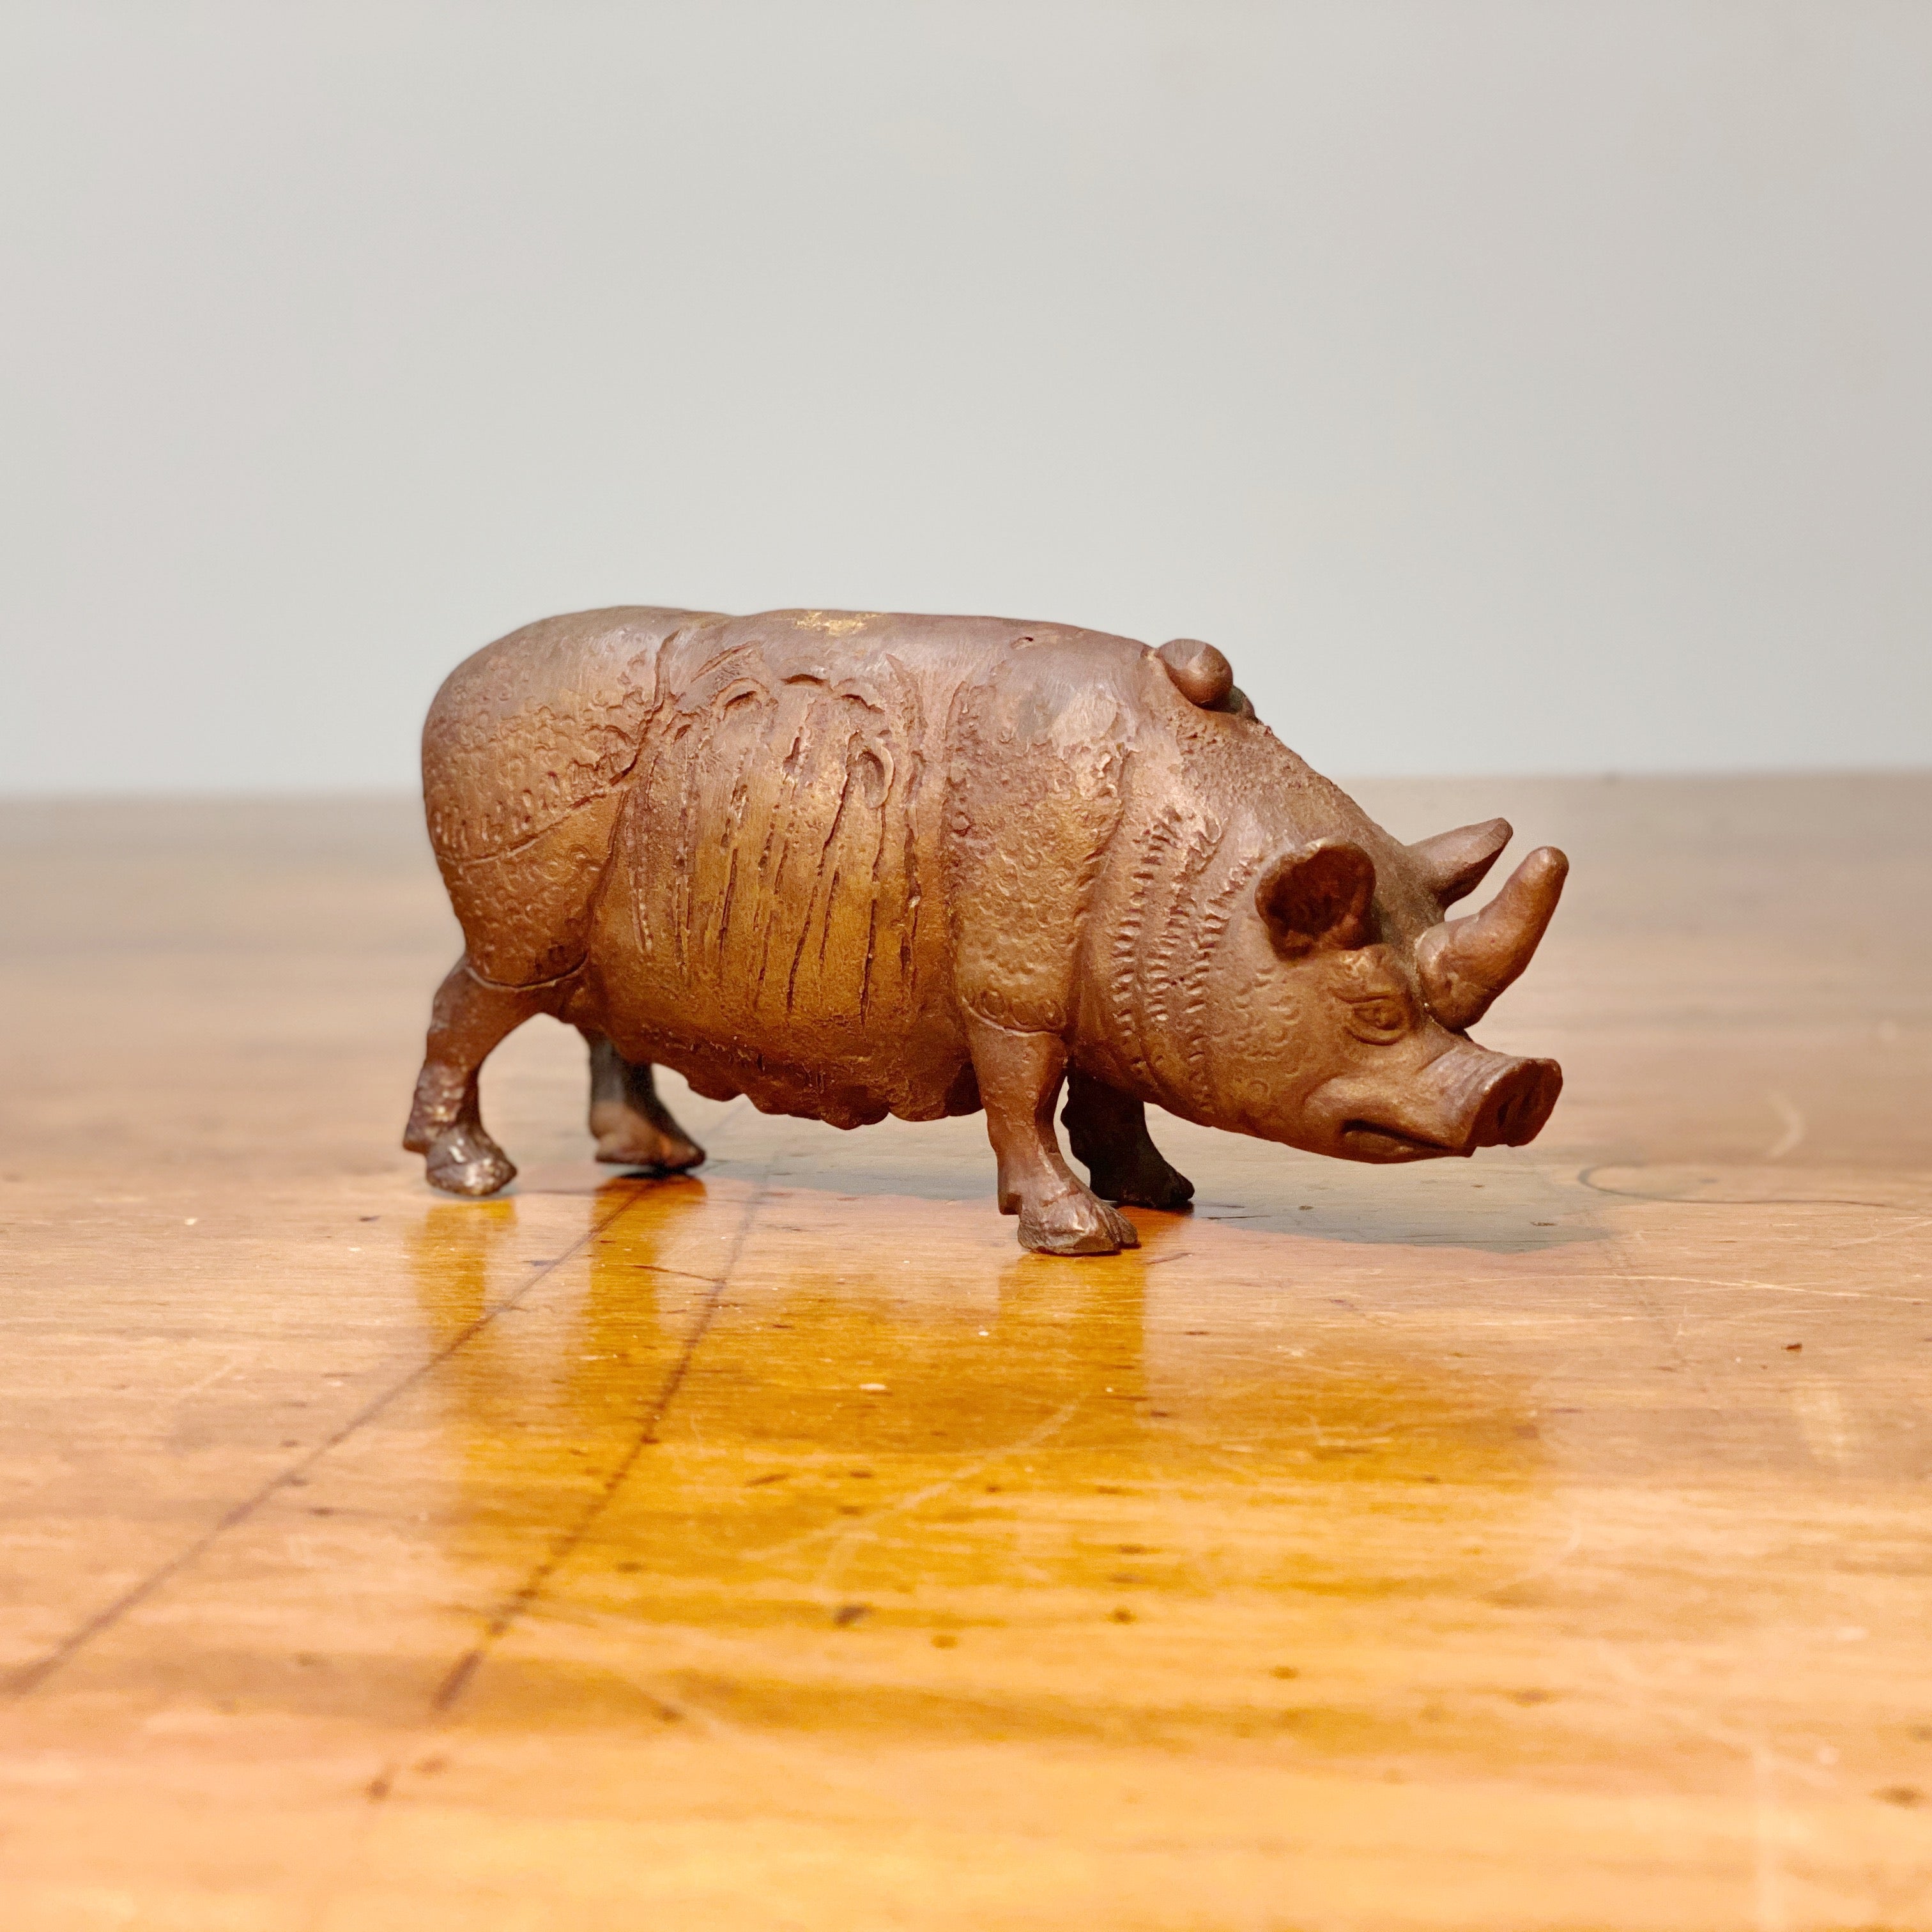 Iowa Art Stephen Maxon Bronze Rhino Pig - 1991 - Signed and Dated - Rare Original Artist Sculpture - Surreal Art - Folk Art - Outsider - Iowa Artist